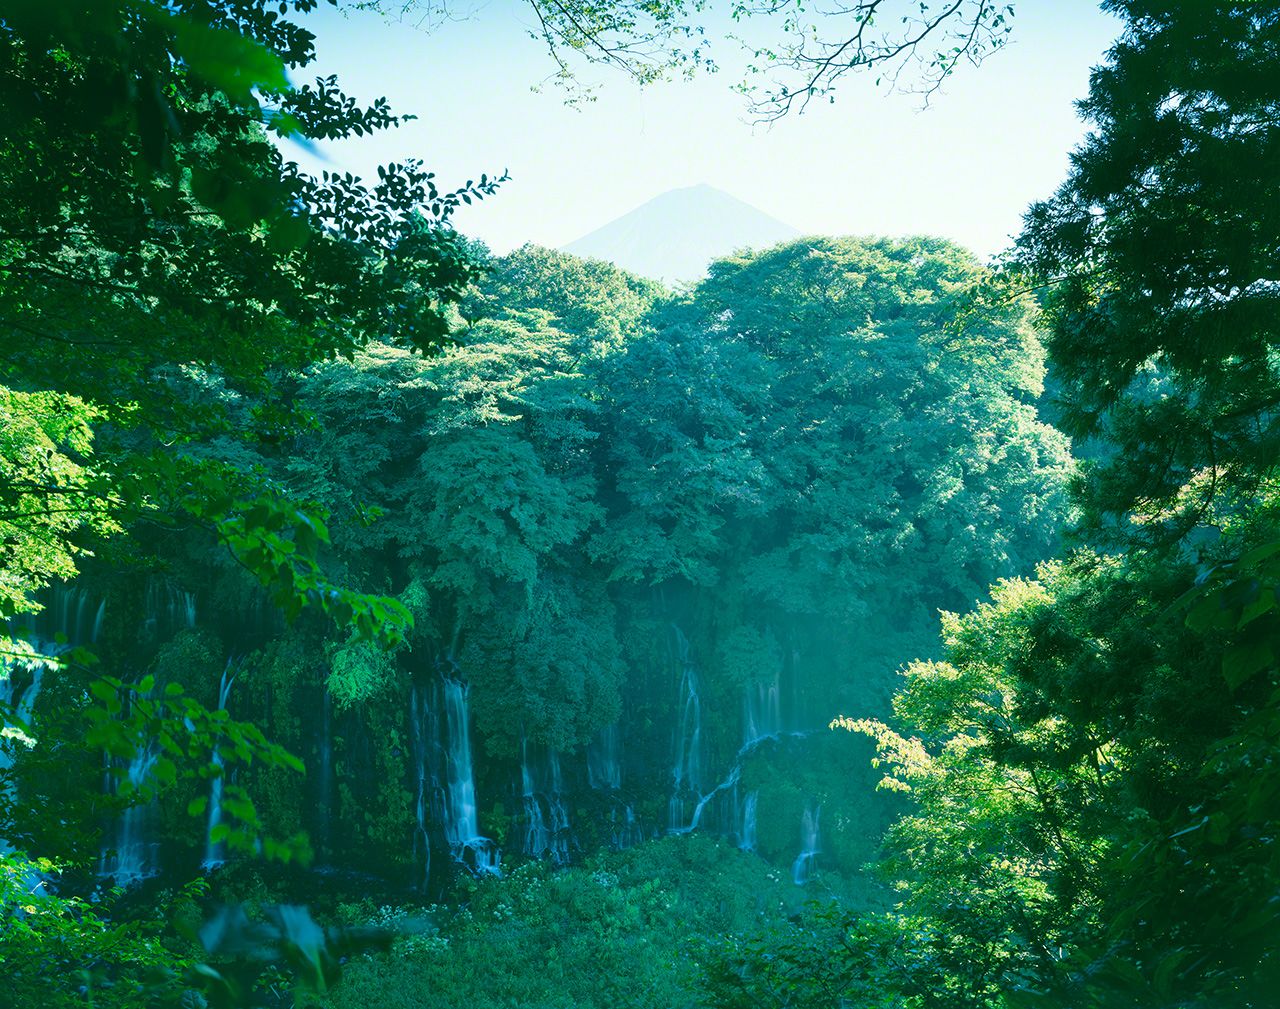 Shiraitonotaki—waterfalls thread white water through the forest.